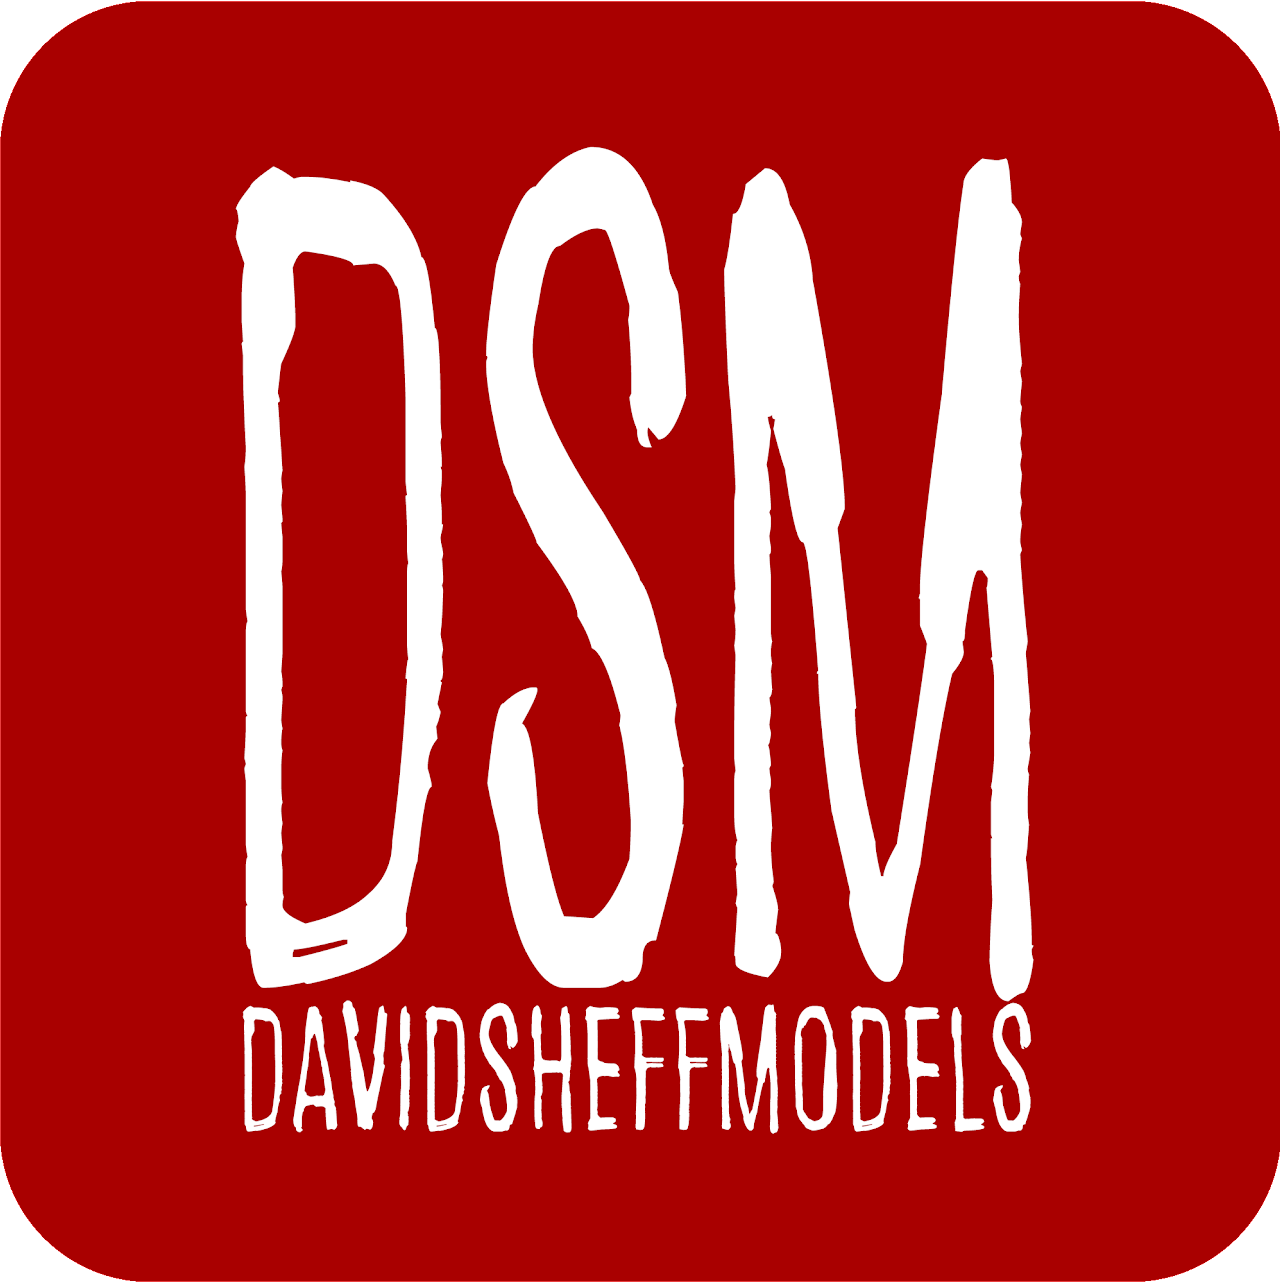 David Sheff Models